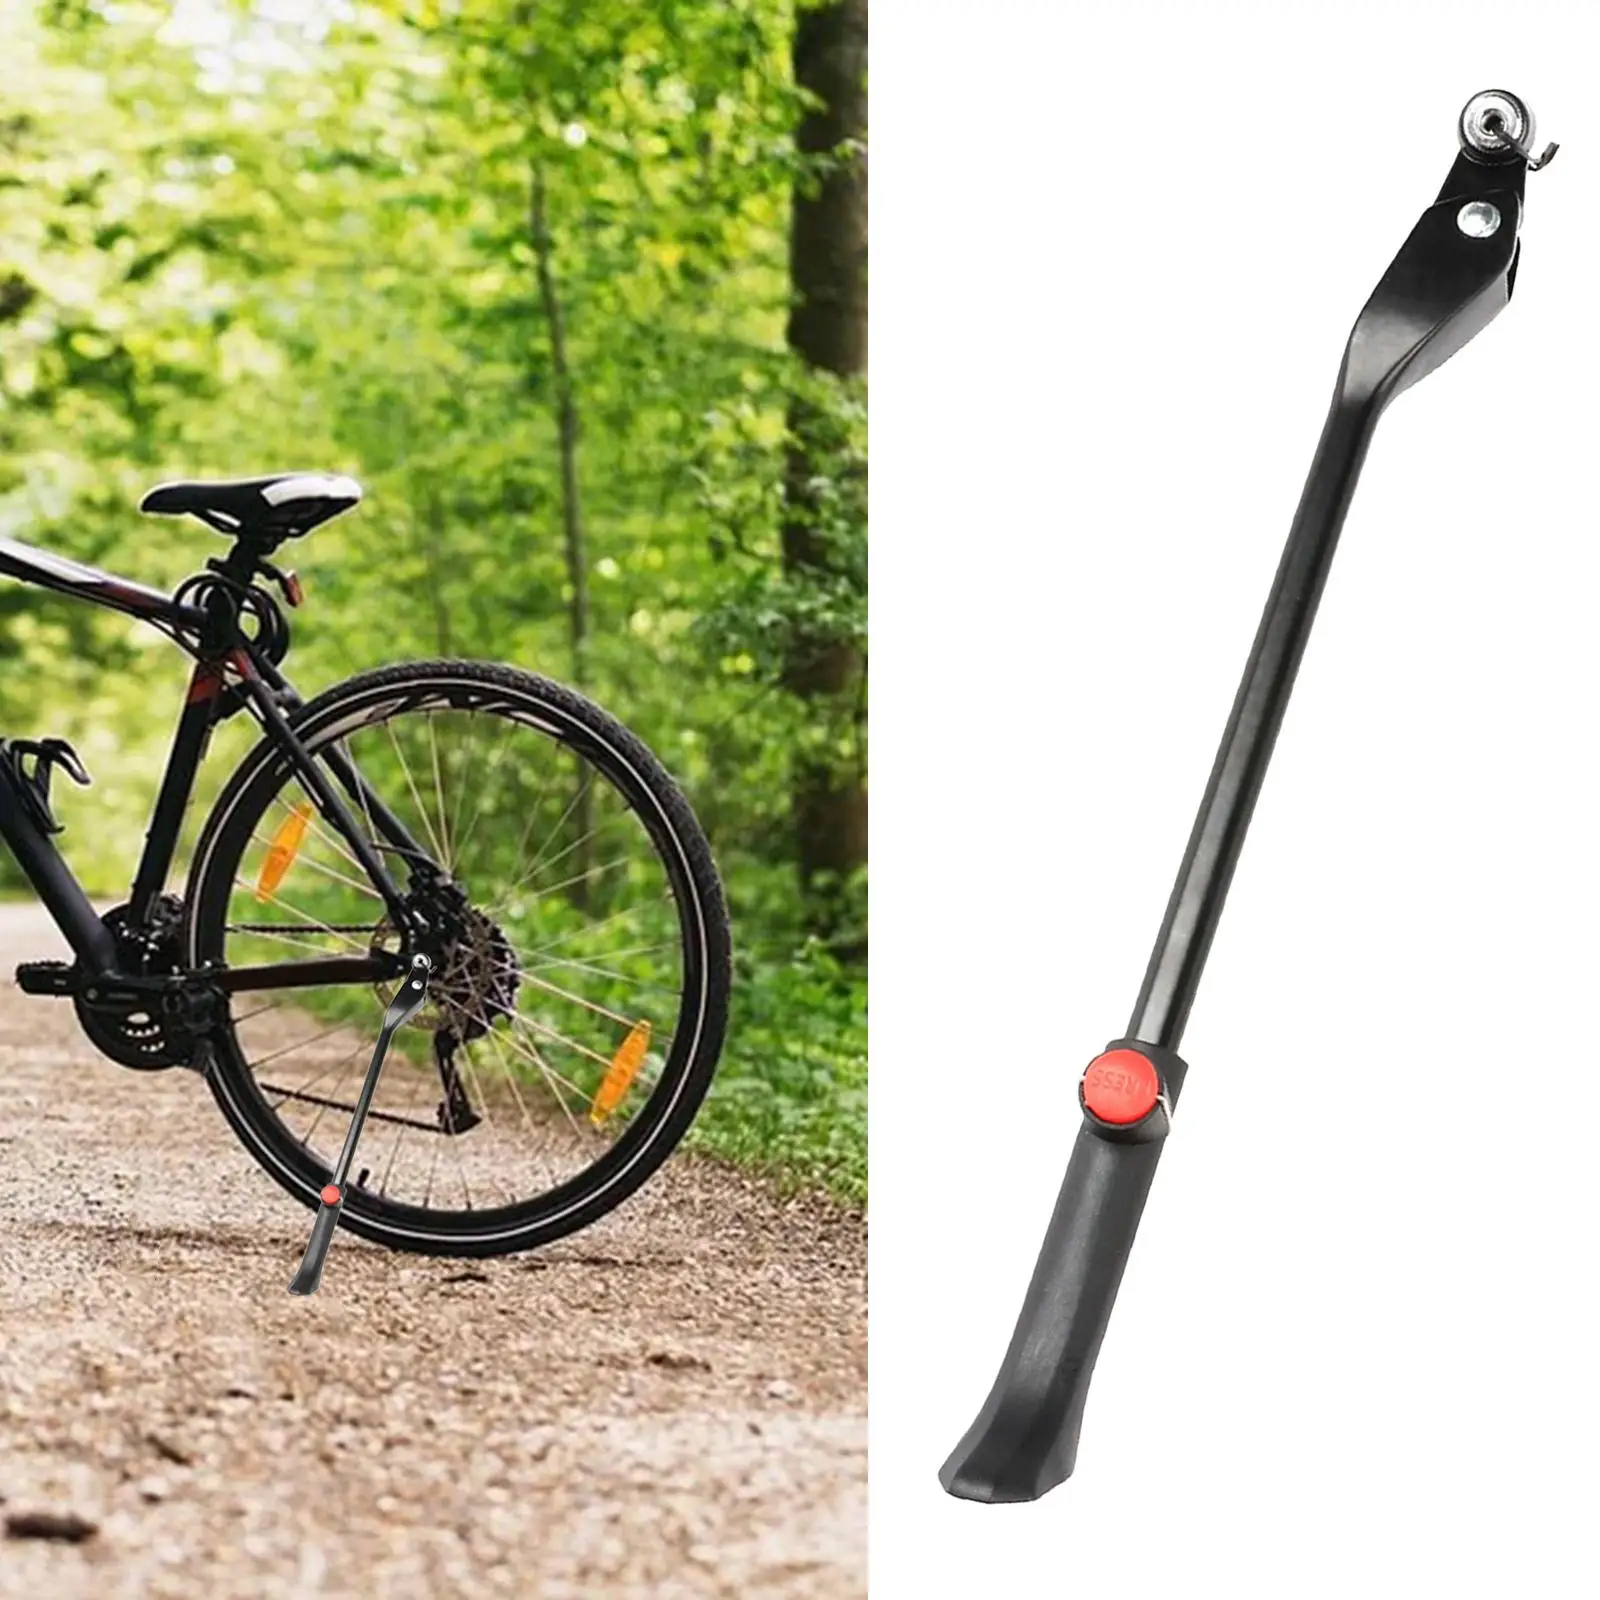 36-41cm Adjustable Kickstand Stand Bike Cycling Accessories Foot Brace